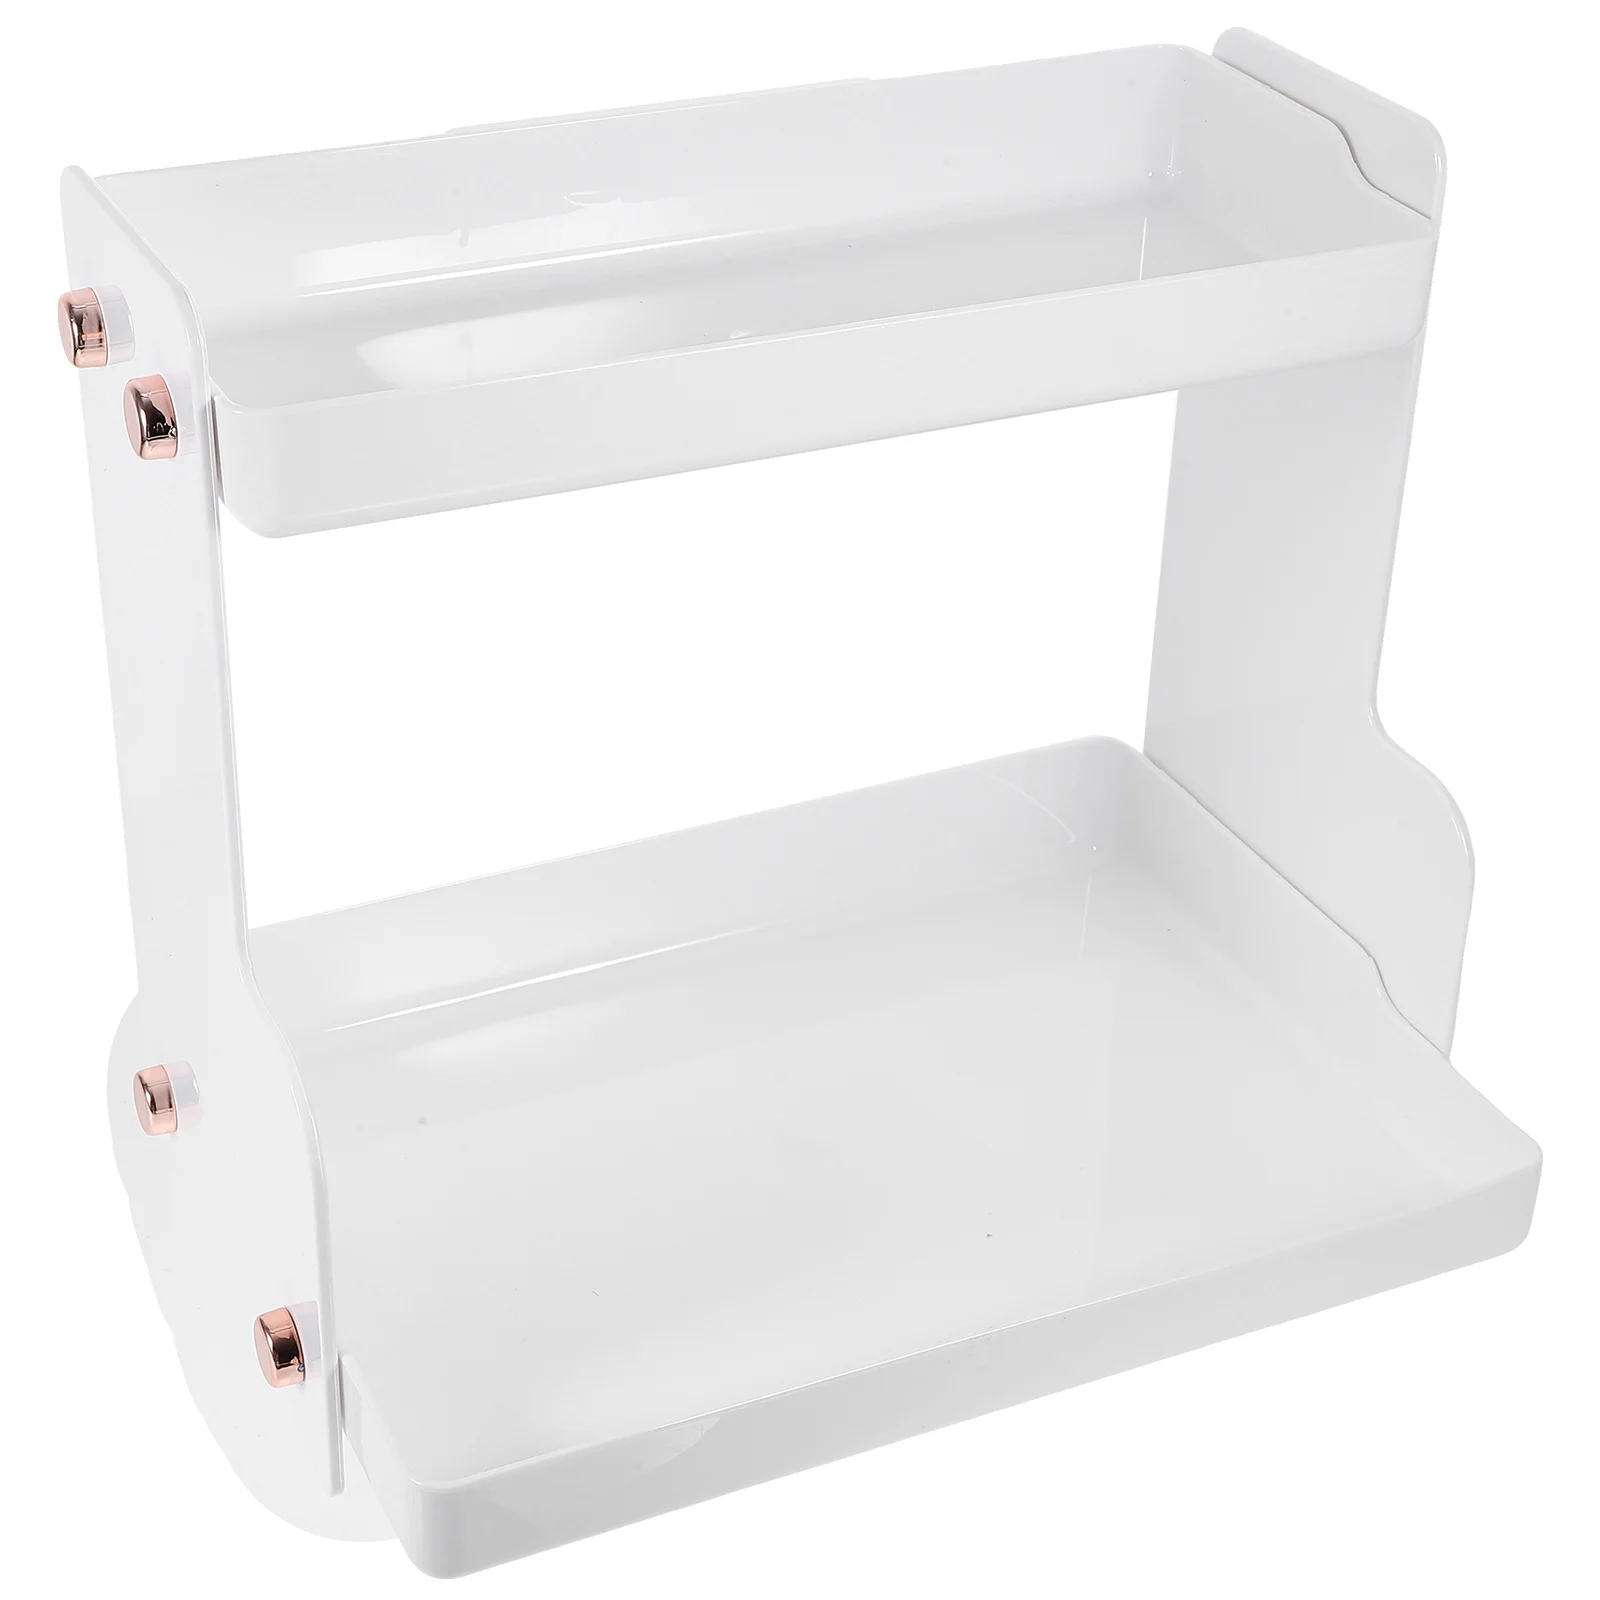 

Vanity Tray Counter Top Organizer Shelf Kitchen Spice Rack Toiletries Countertop Bathroom Holder Storage White